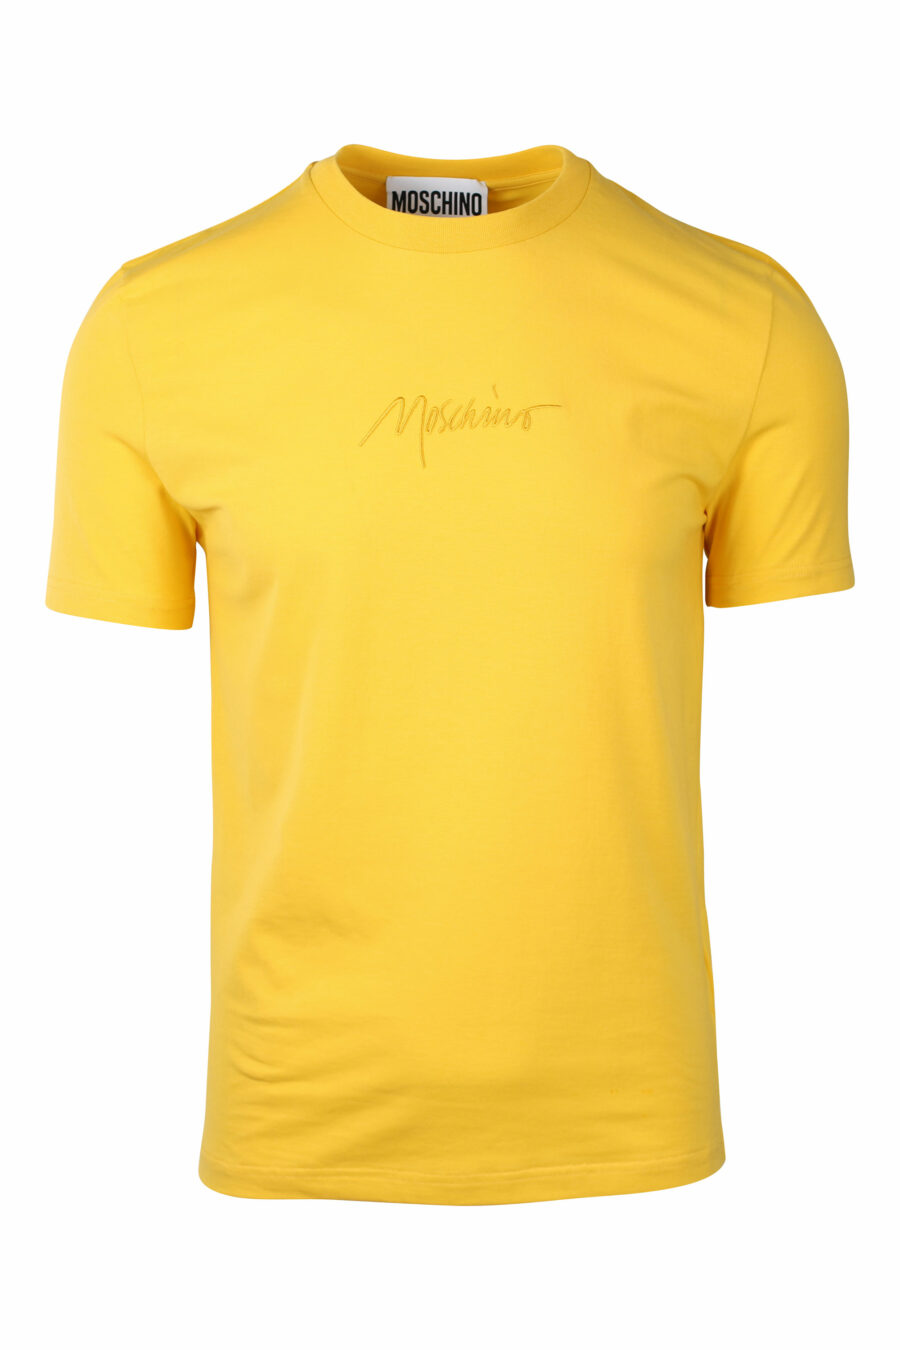 Moschino - Camiseta amarilla con logo 